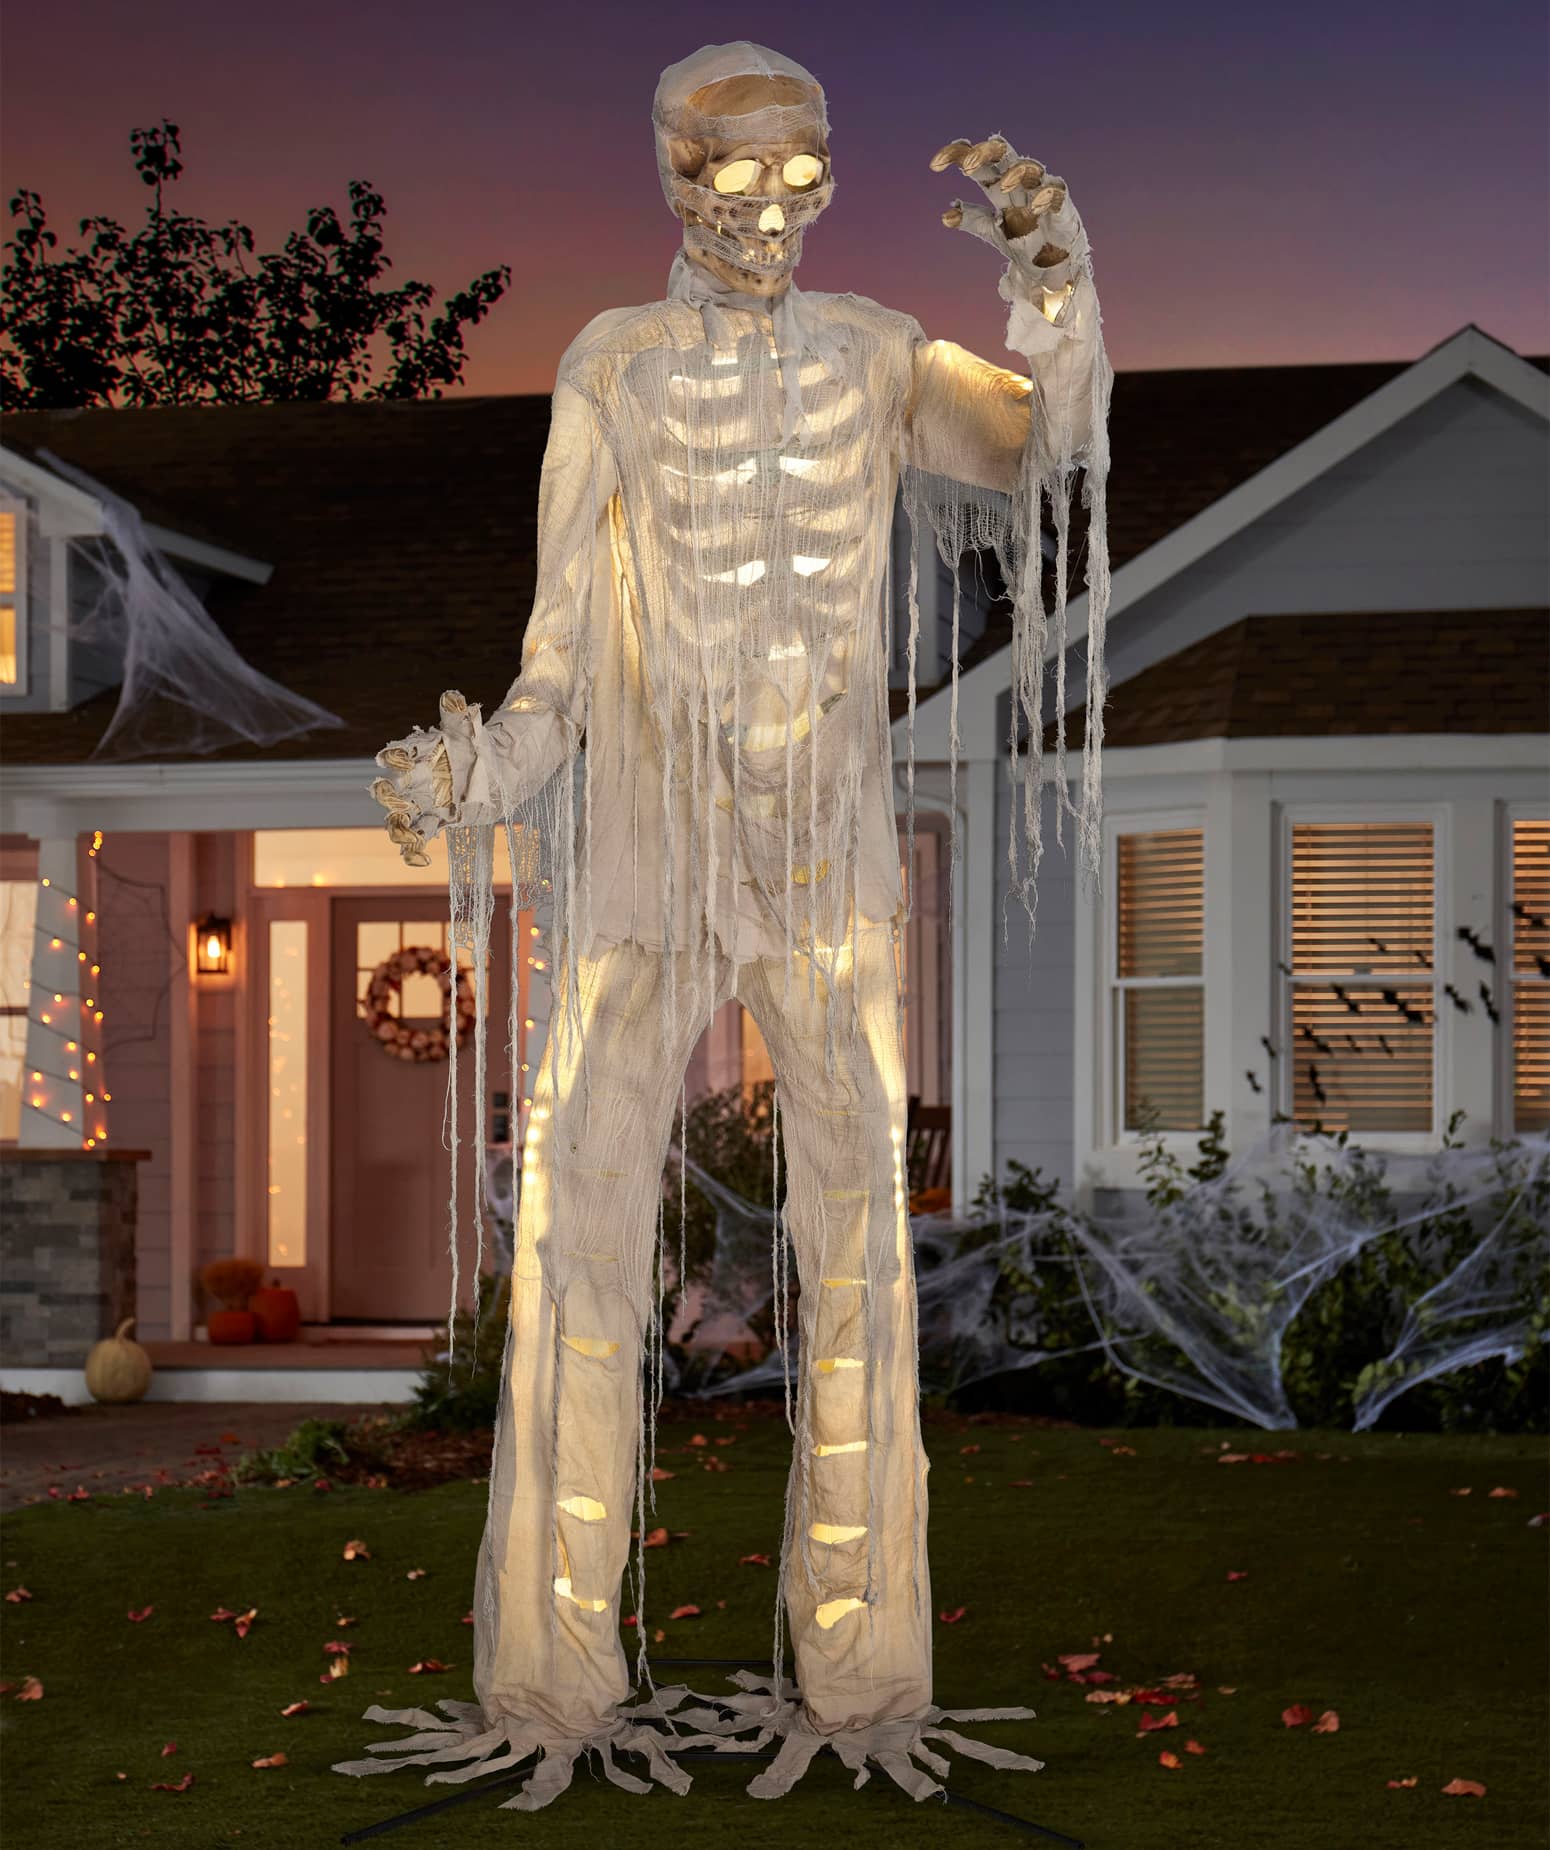 Massive 12 Foot Tall Light-Up Animatronic Skeletal Mummy Statue